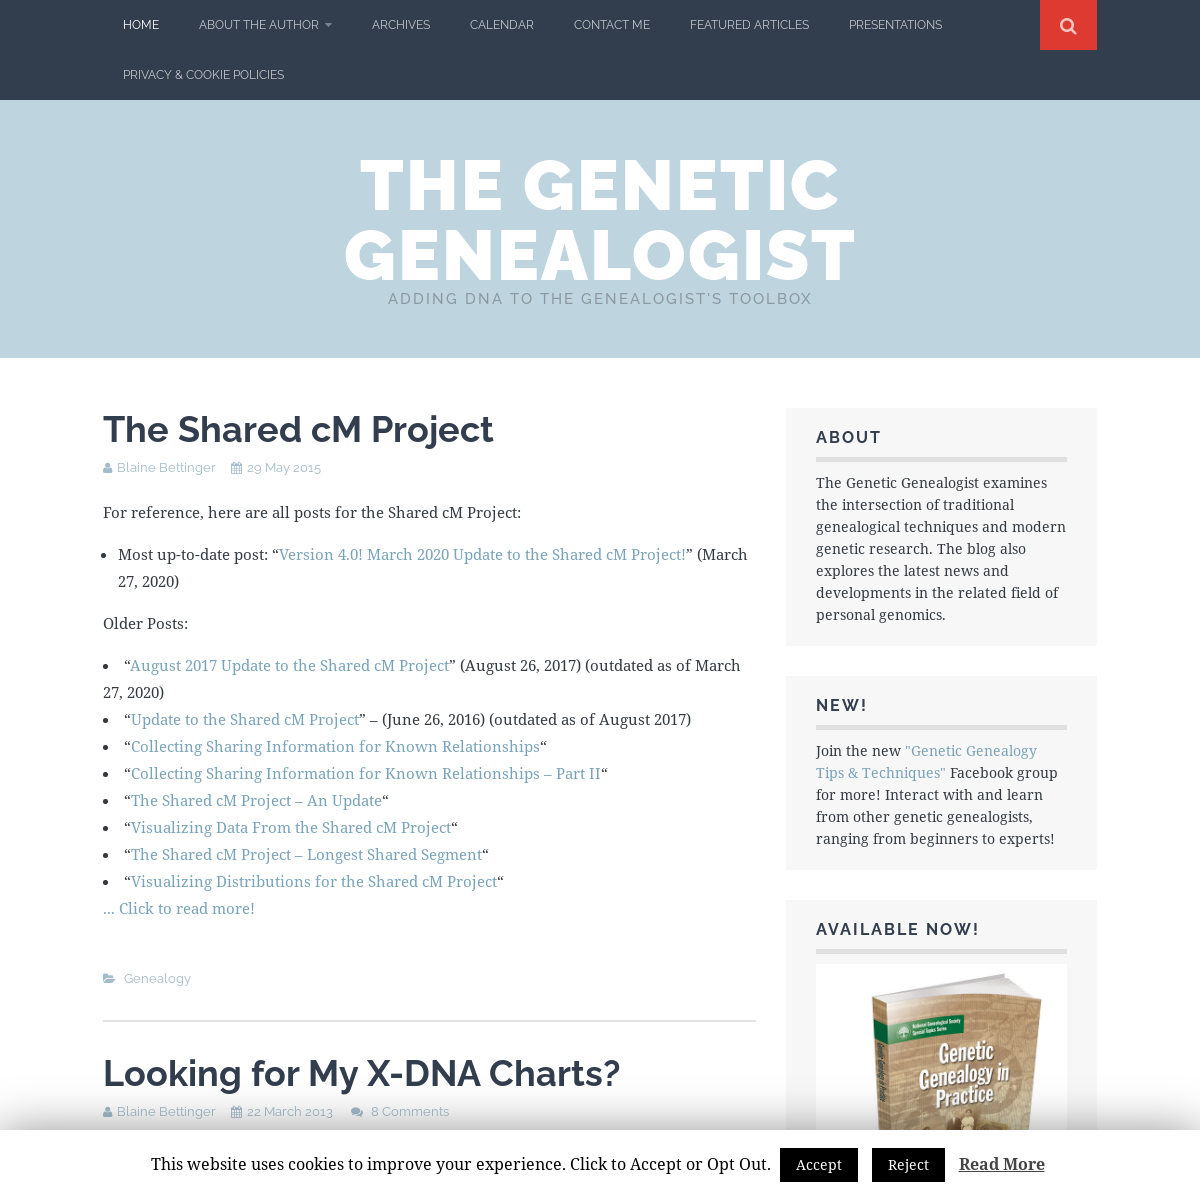 A complete backup of thegeneticgenealogist.com